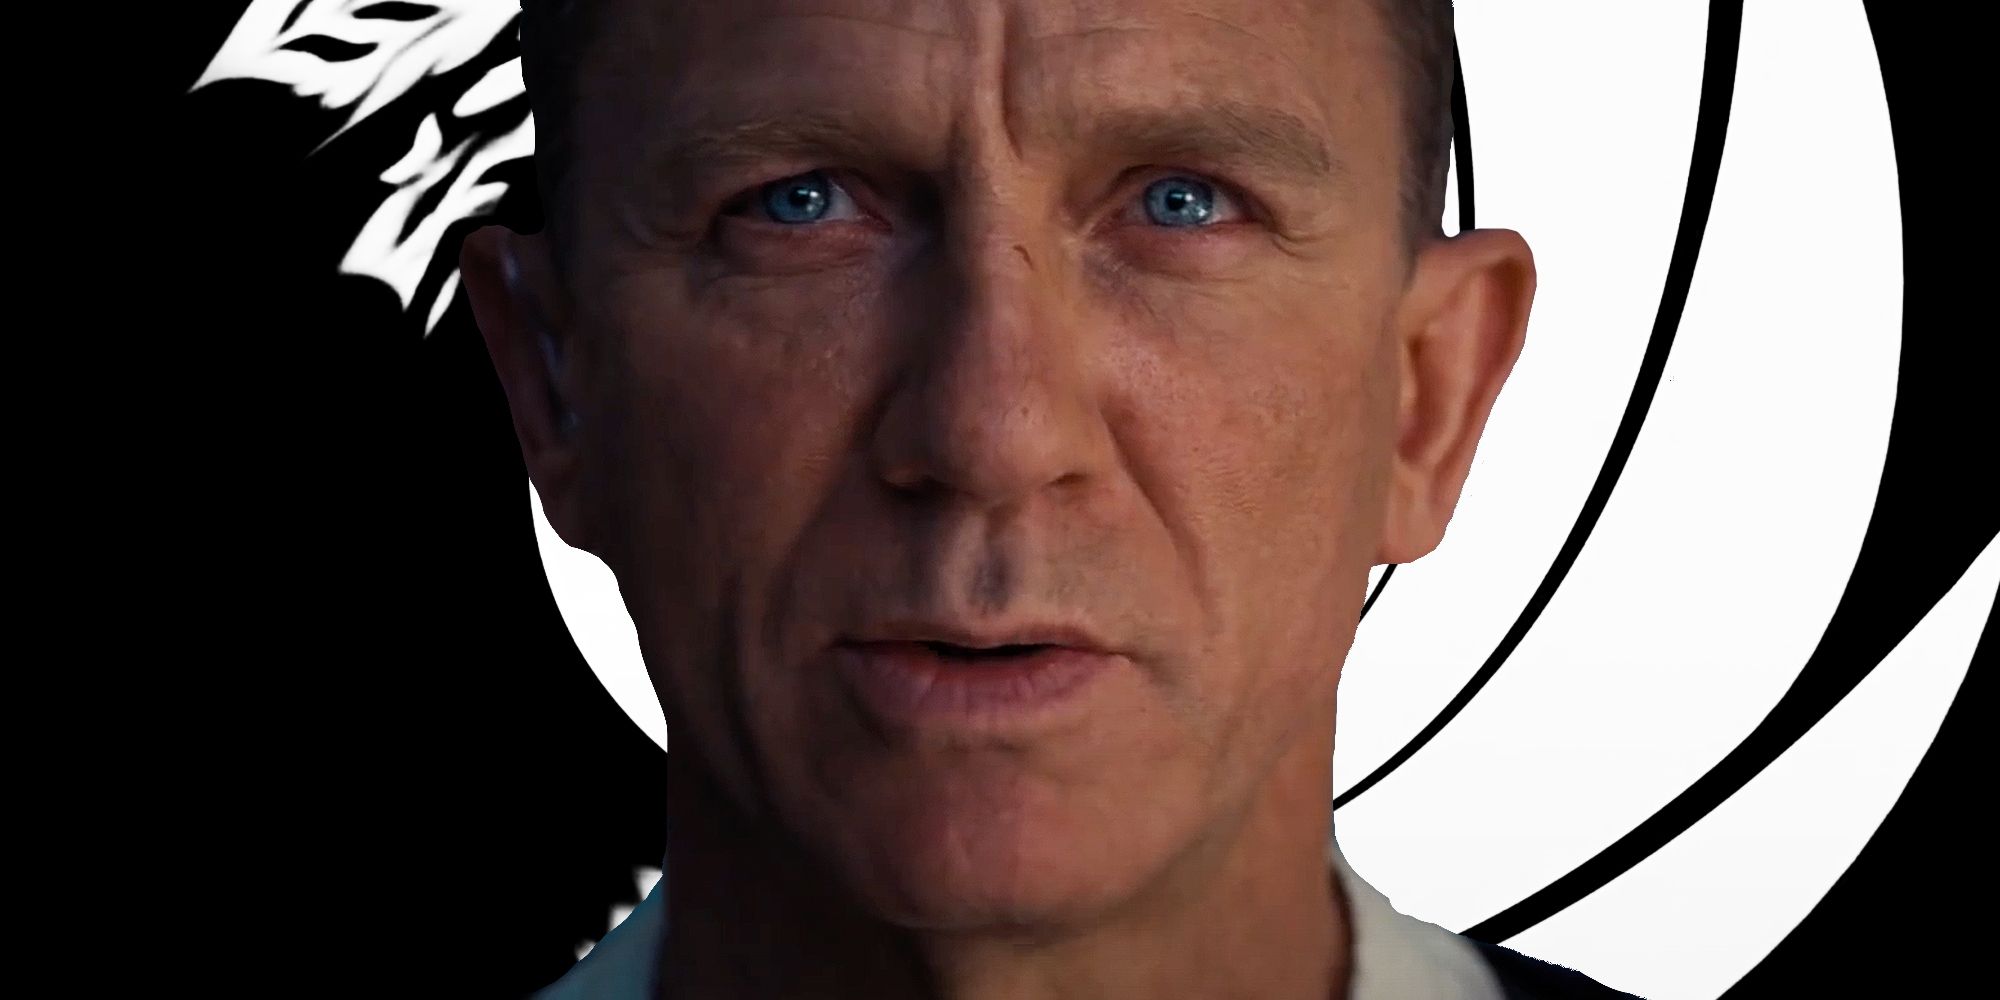 Daniel Craig as James Bond in No Time To Die superimposed over the gun barrel motif